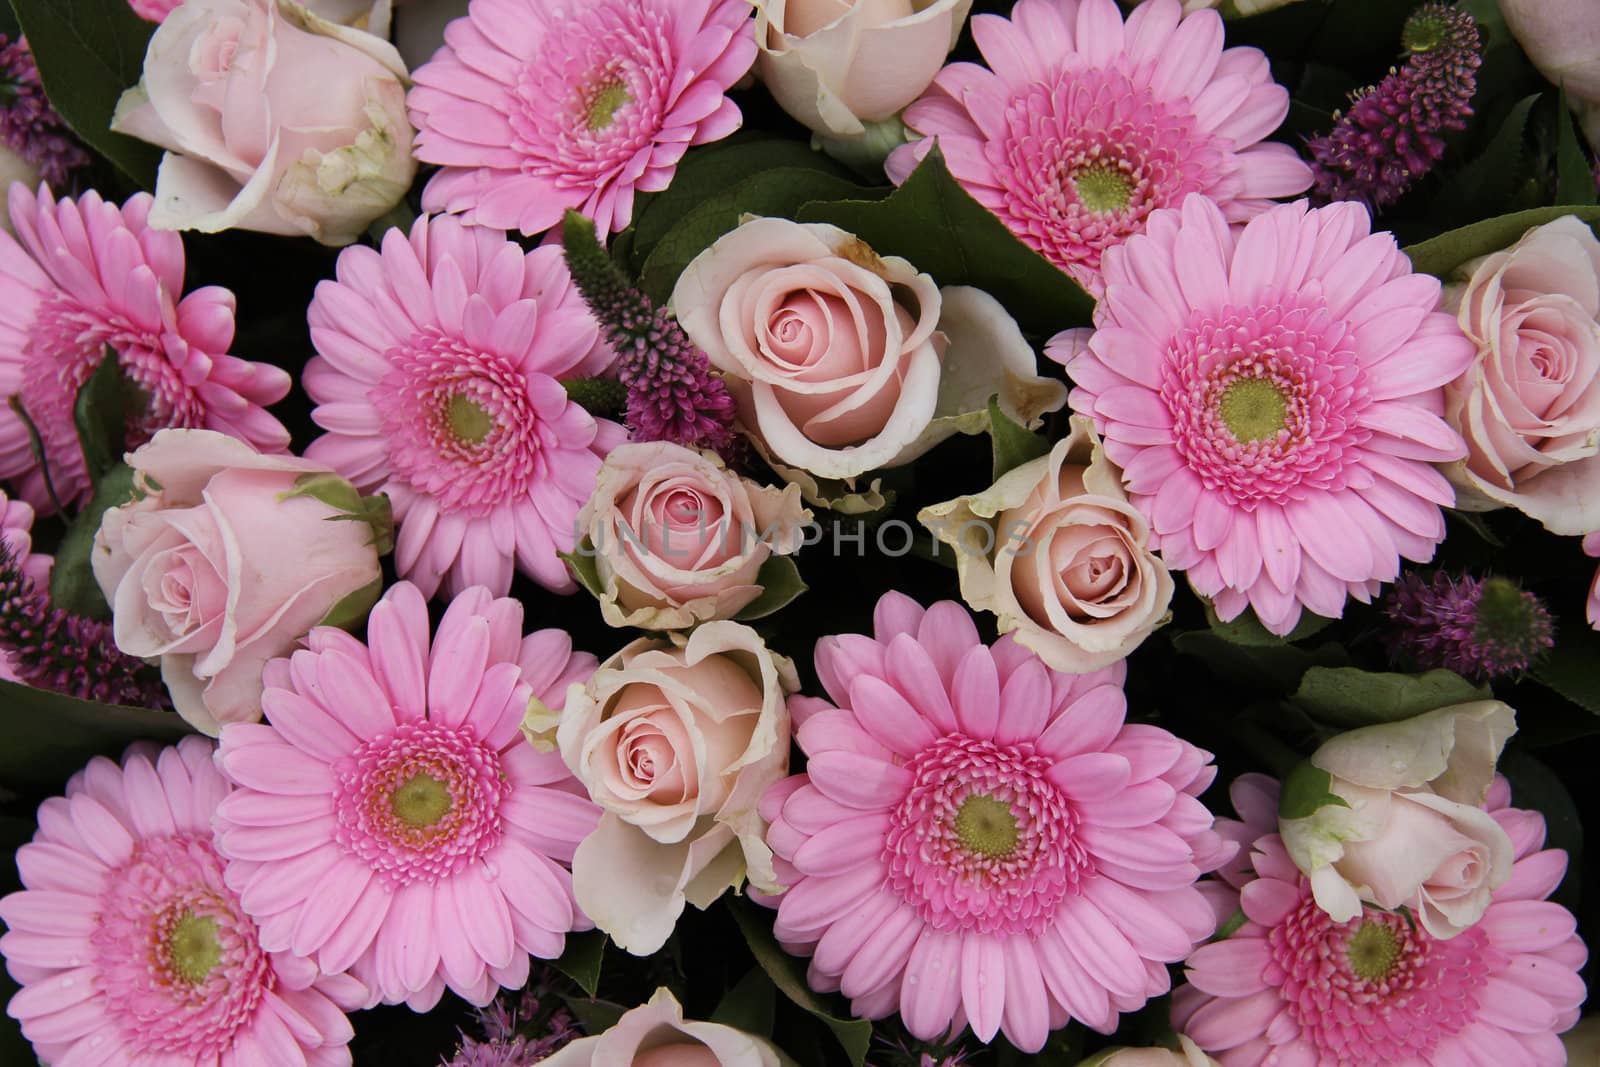 Pink roses and gerberas in a bridal floral arrangement